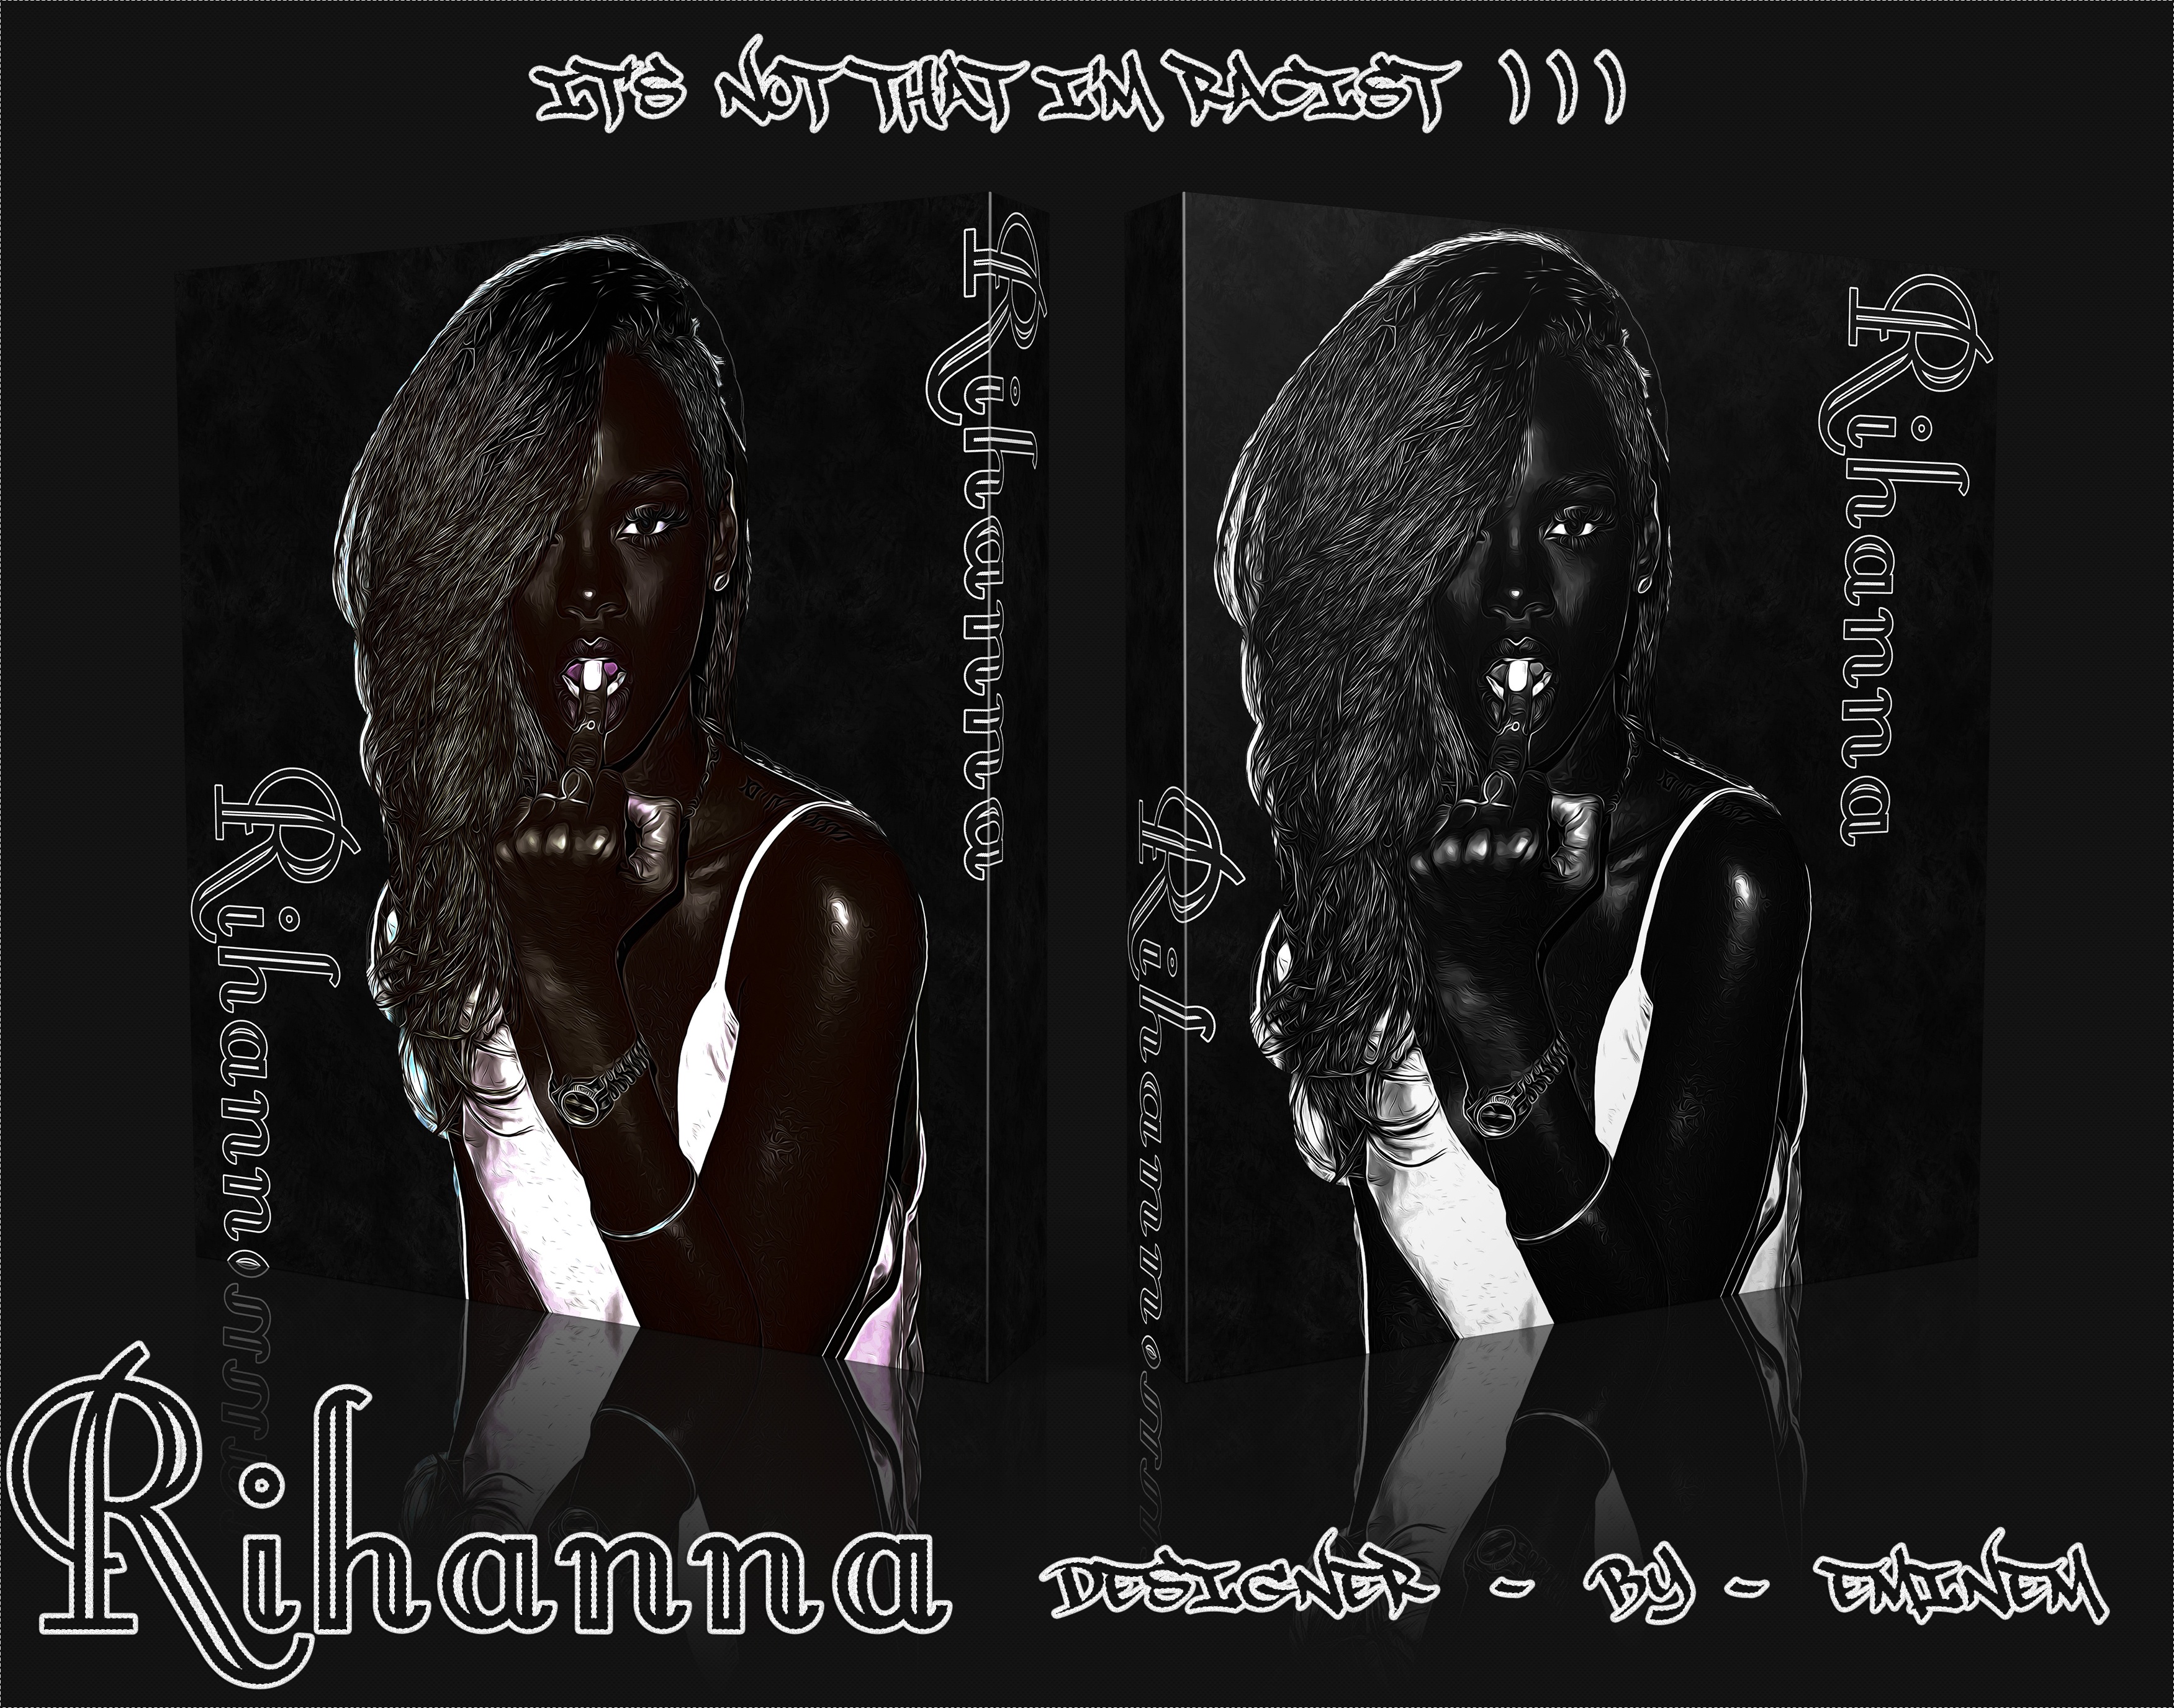 Rihanna - Good Girl Gone Bad box cover